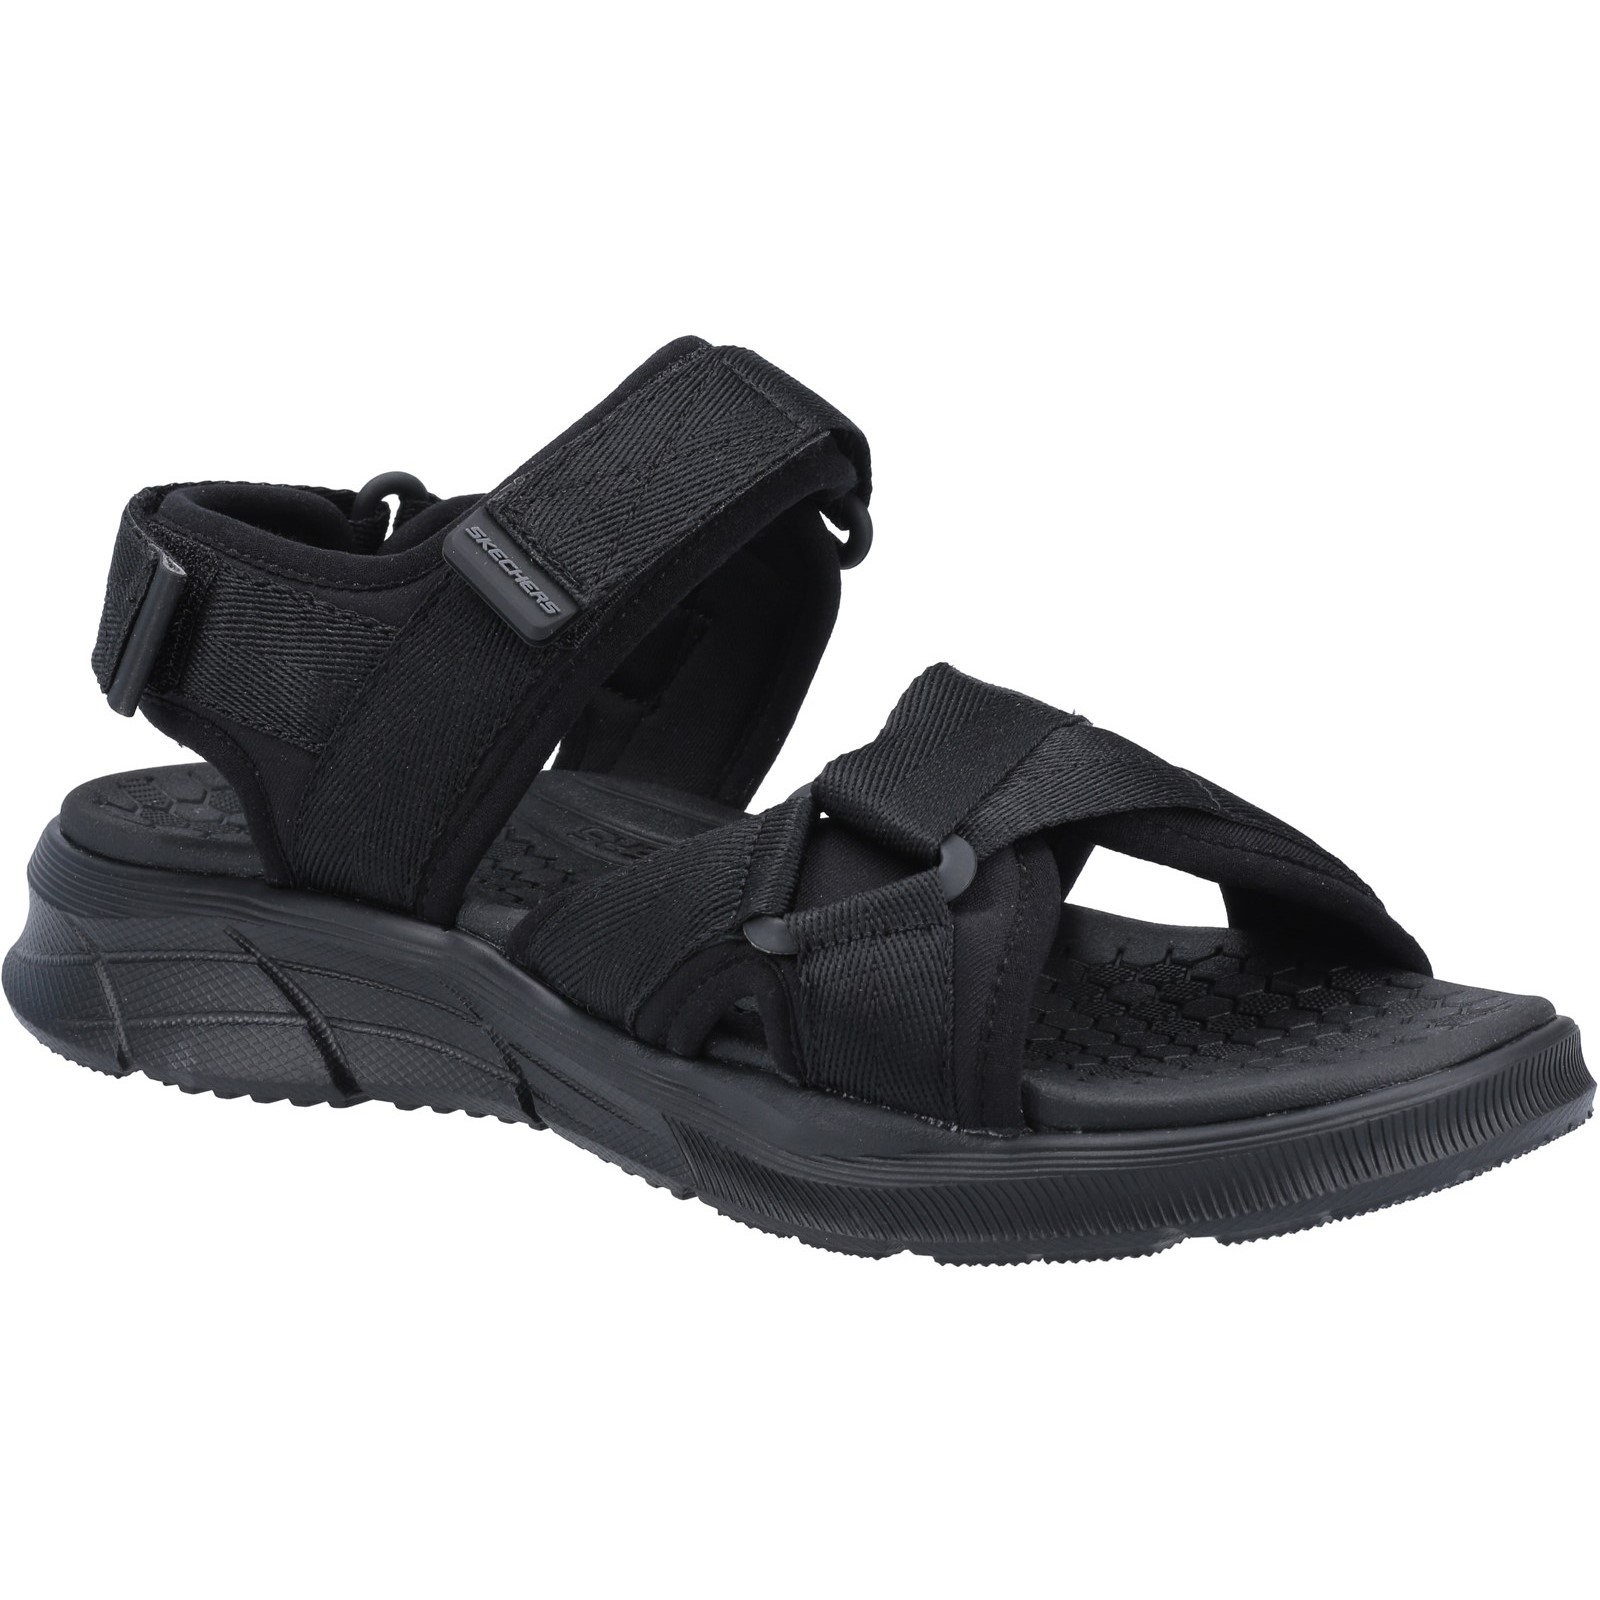 ebay uk skechers sandals